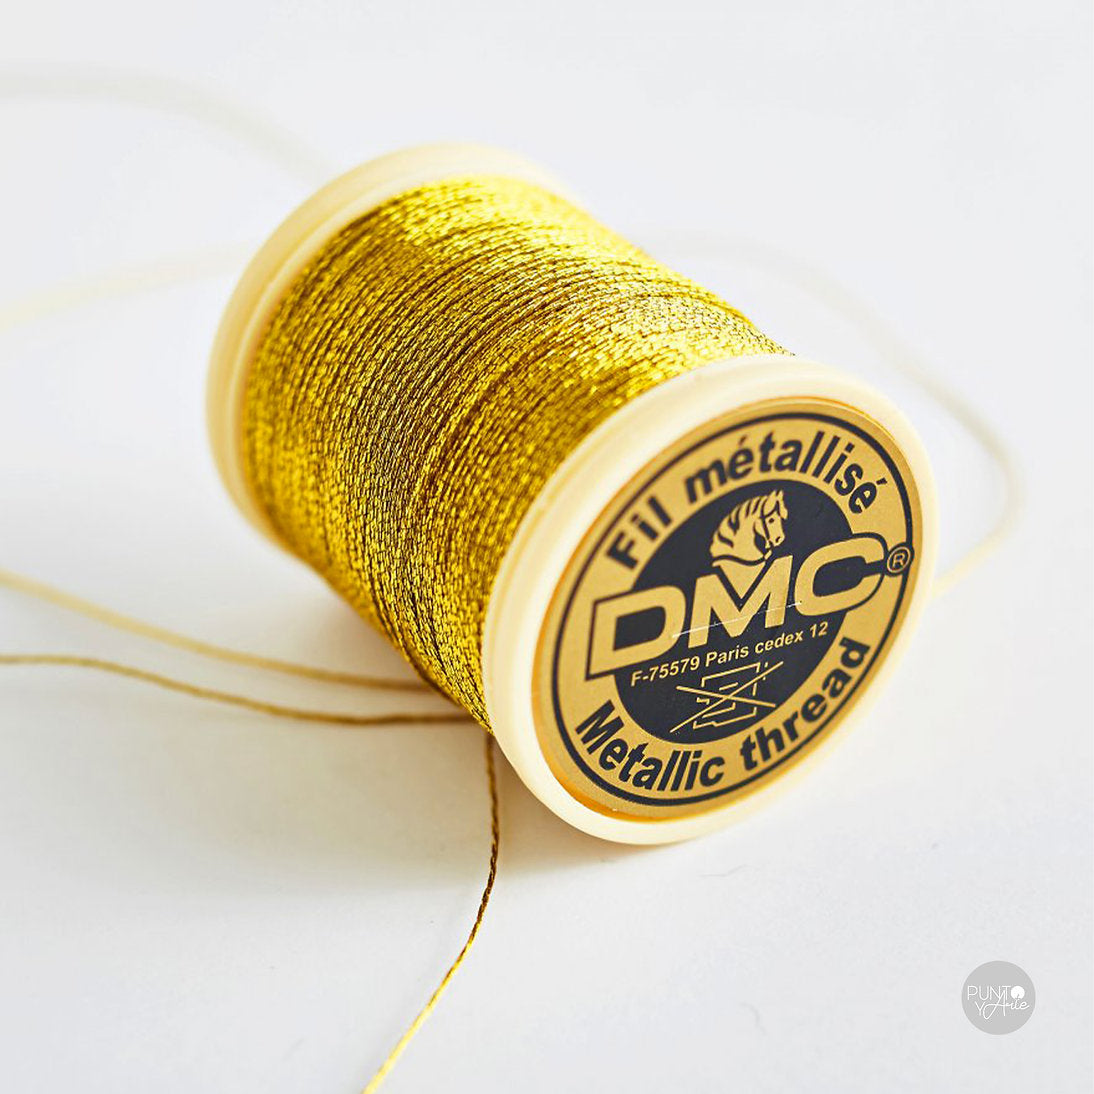 Spool of DMC Metallic Embroidery Thread - 40m 100% Polyester